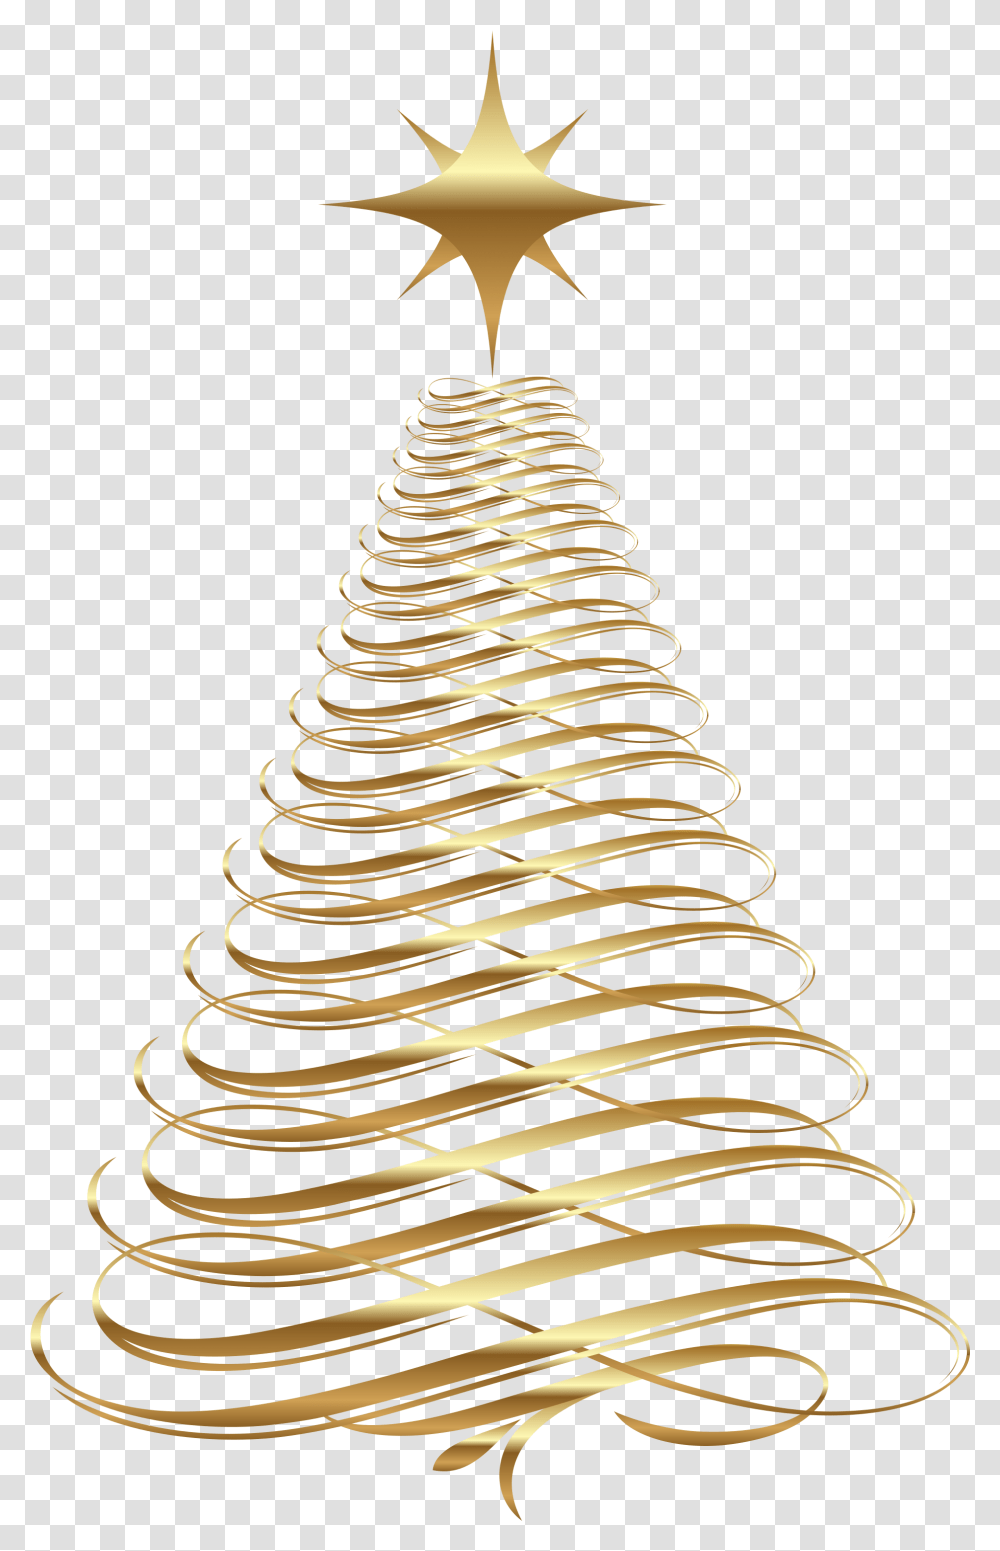 Download Hd Arbolito De Navidad Gold Christmas Clipart, Spiral, Coil, Wedding Cake, Dessert Transparent Png